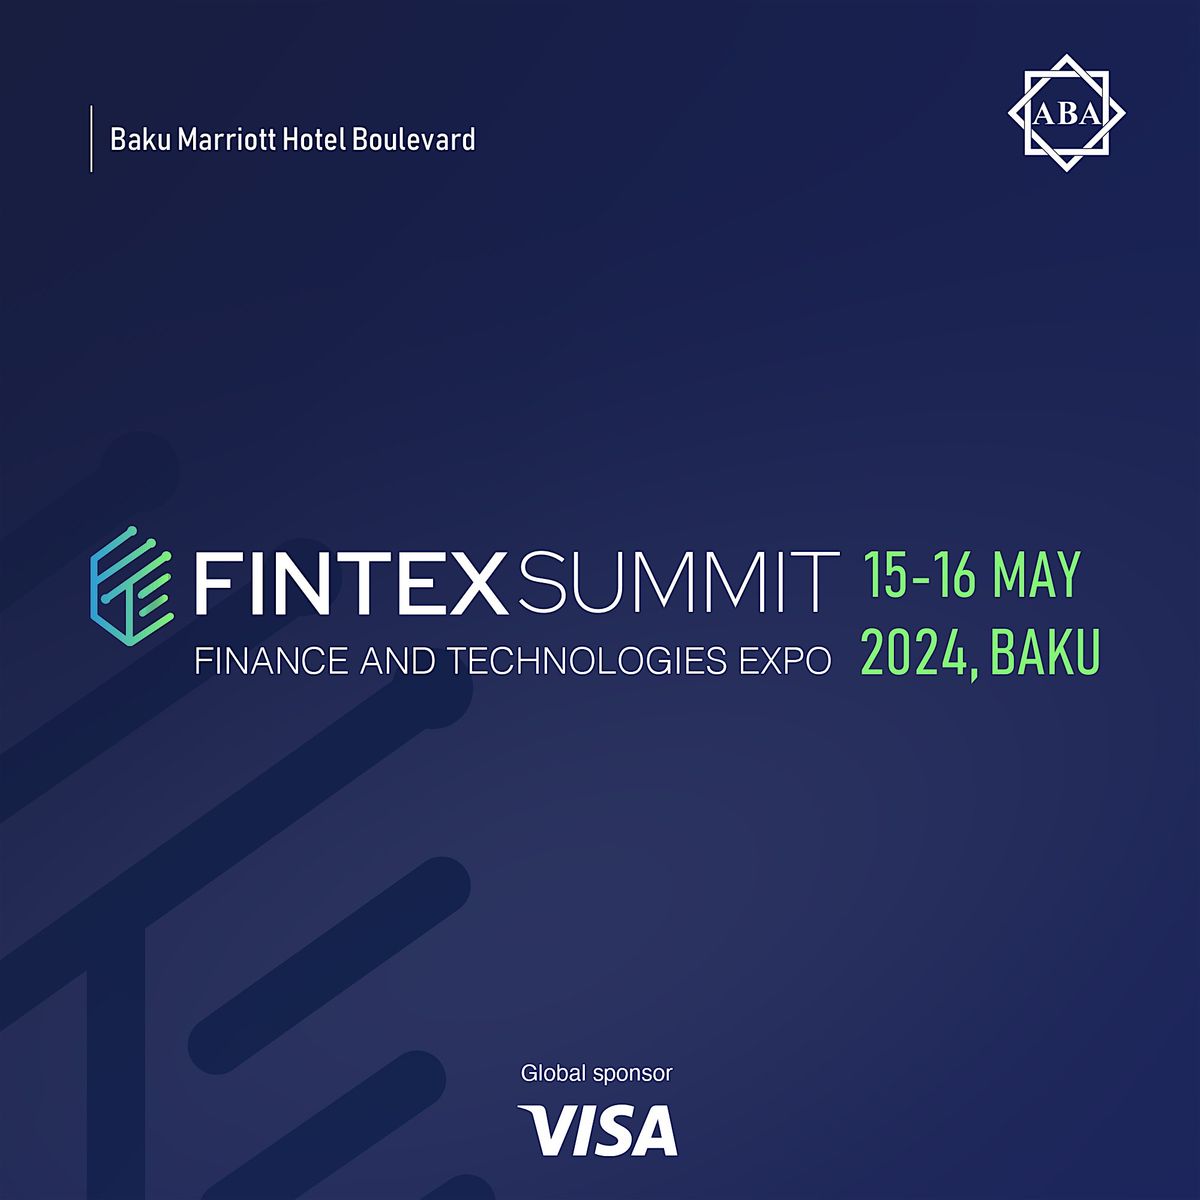 Fintex Summit 2024 - Finance and Technologies Expo